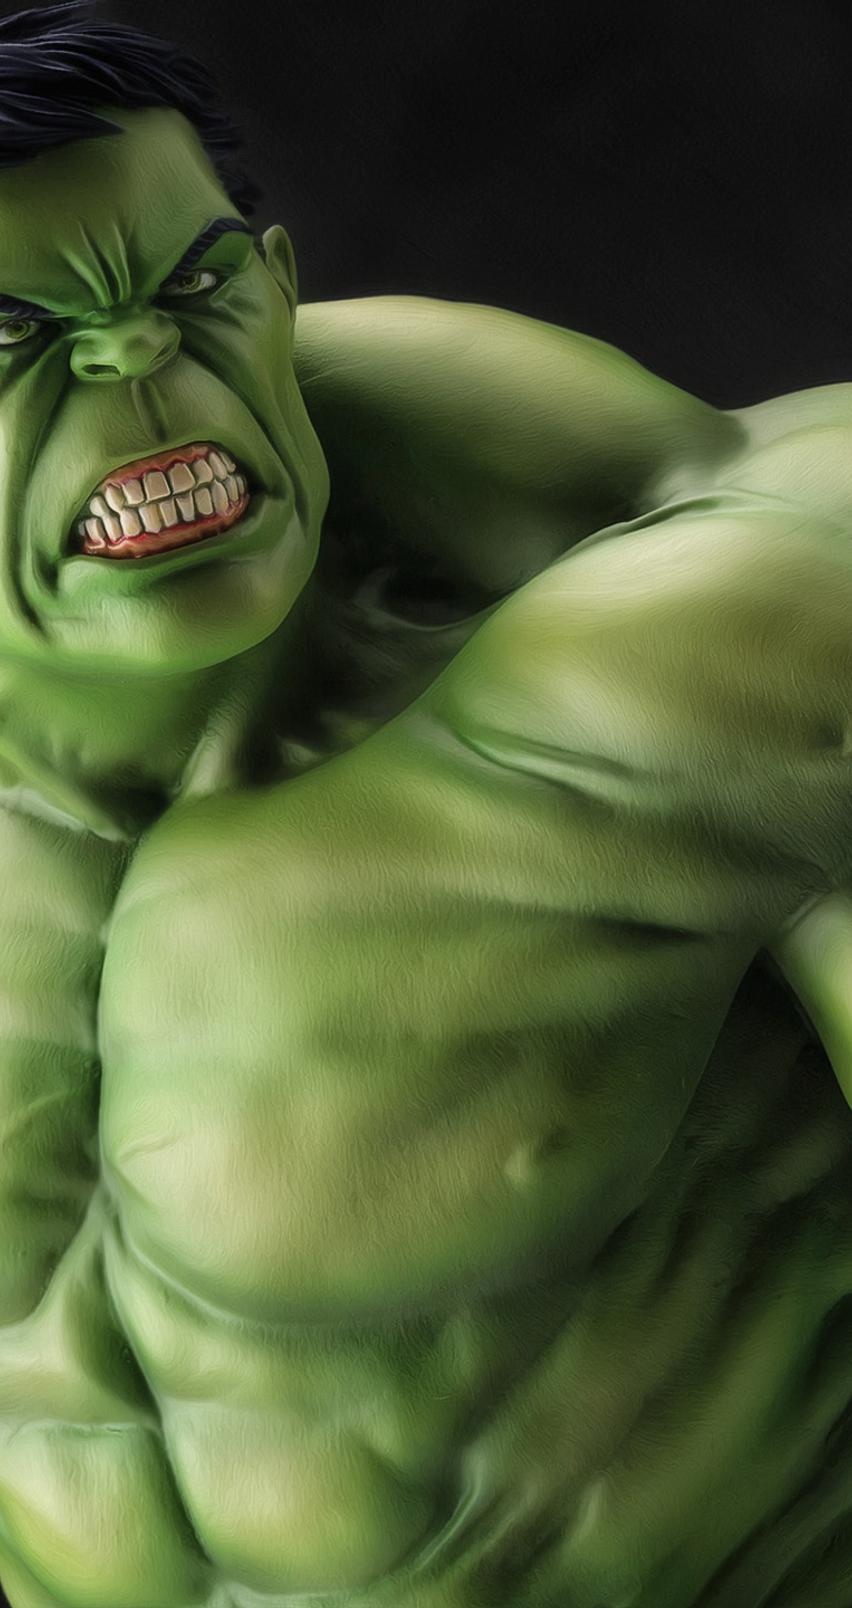 The great Hulk